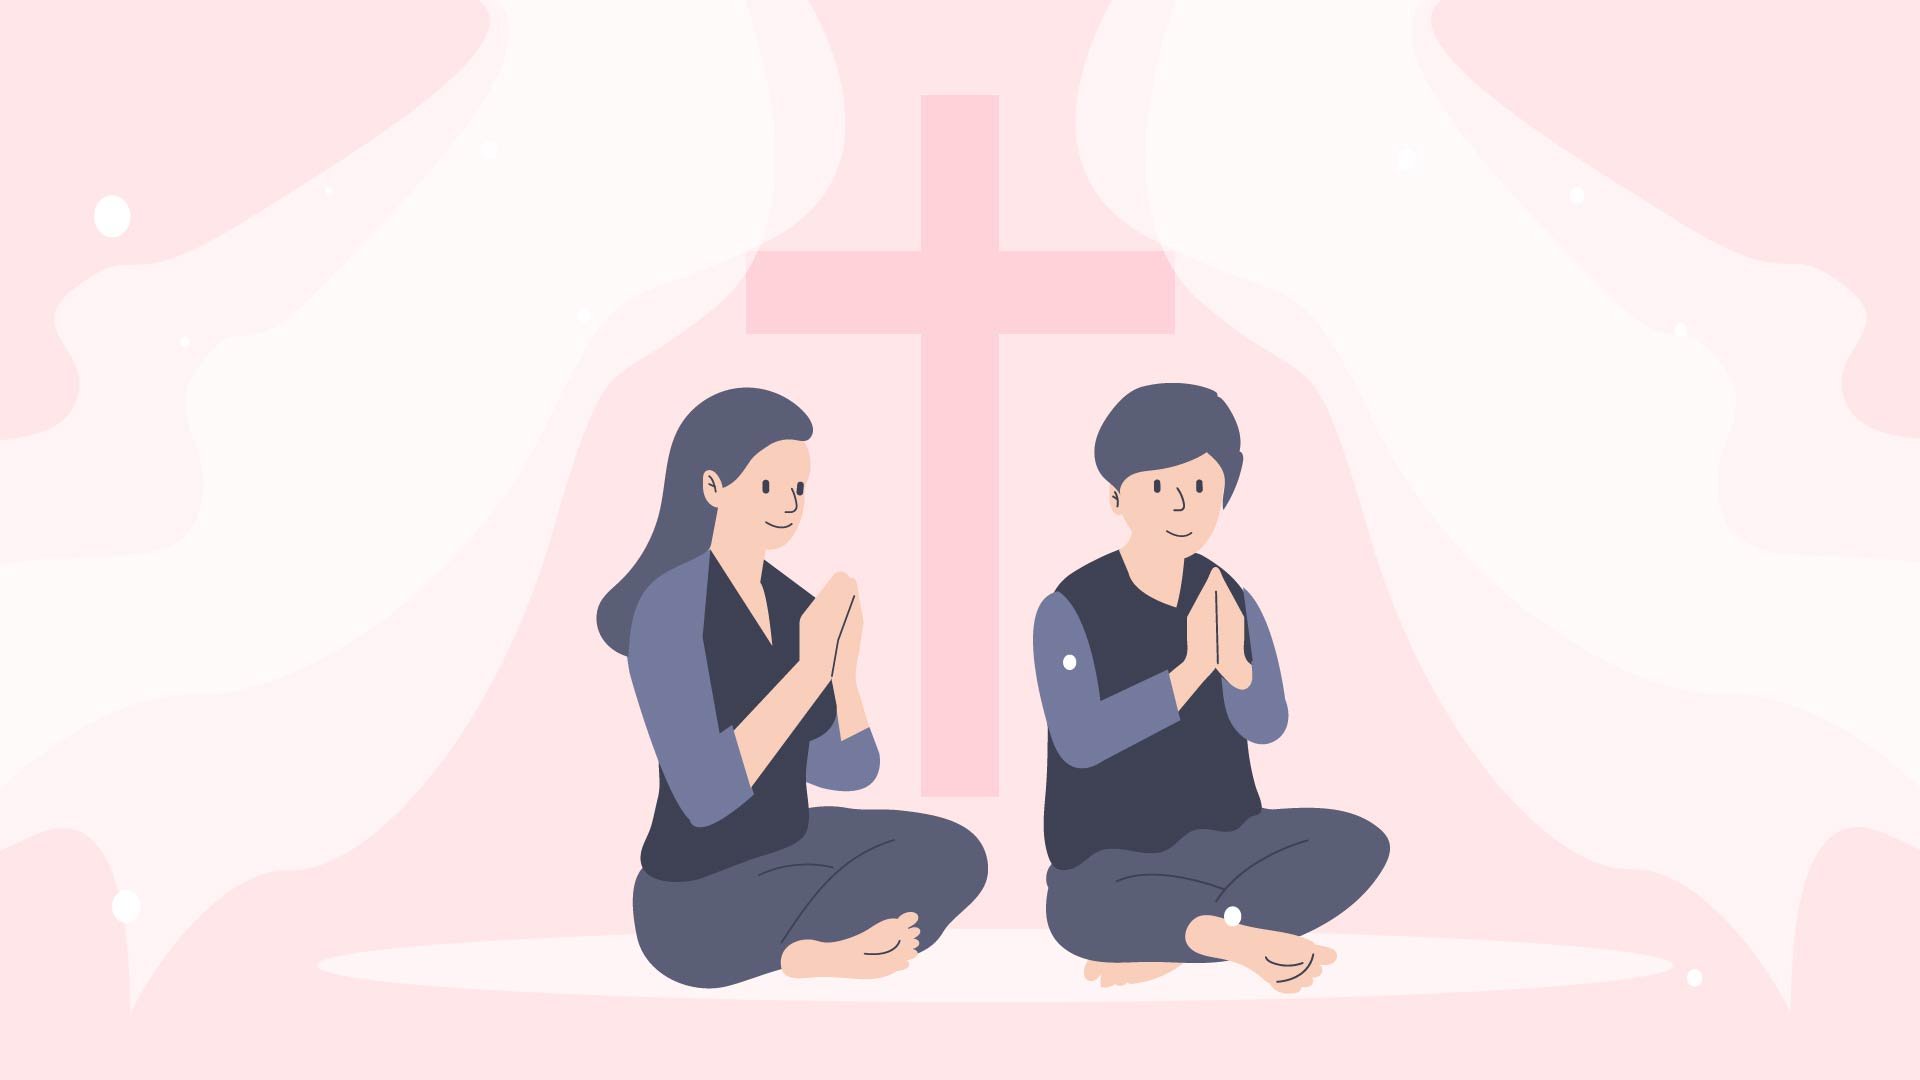 Free National Day of Prayer Cartoon Background in PDF, Illustrator, PSD, EPS, SVG, JPG, PNG